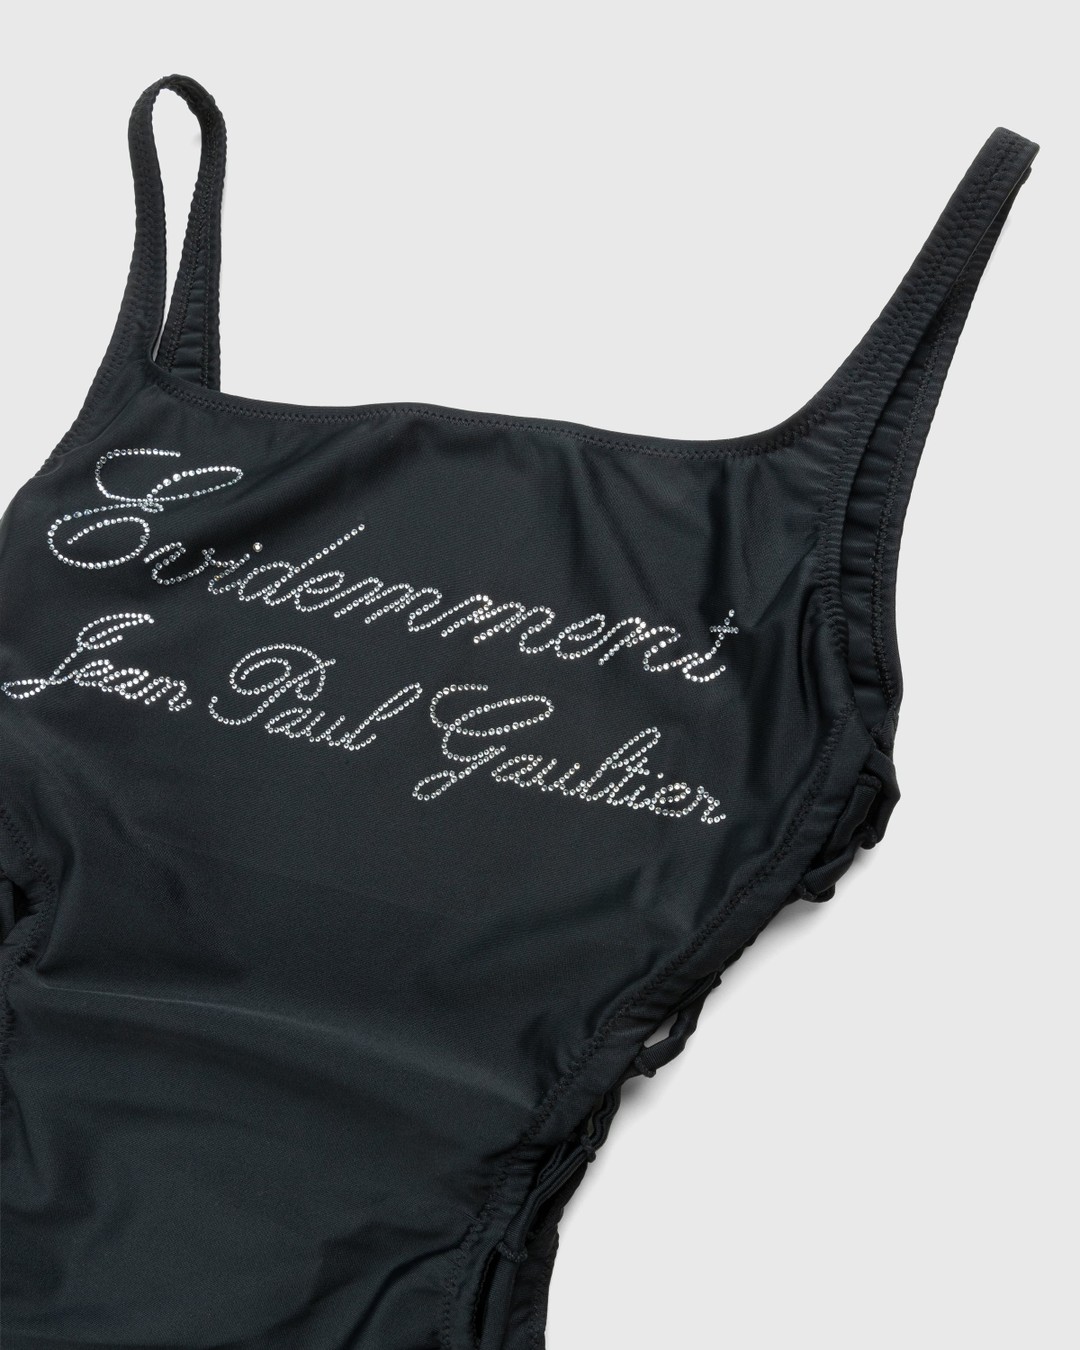 Jean Paul Gaultier – Évidemment Swimsuit Black - Swimwear - Black - Image 3